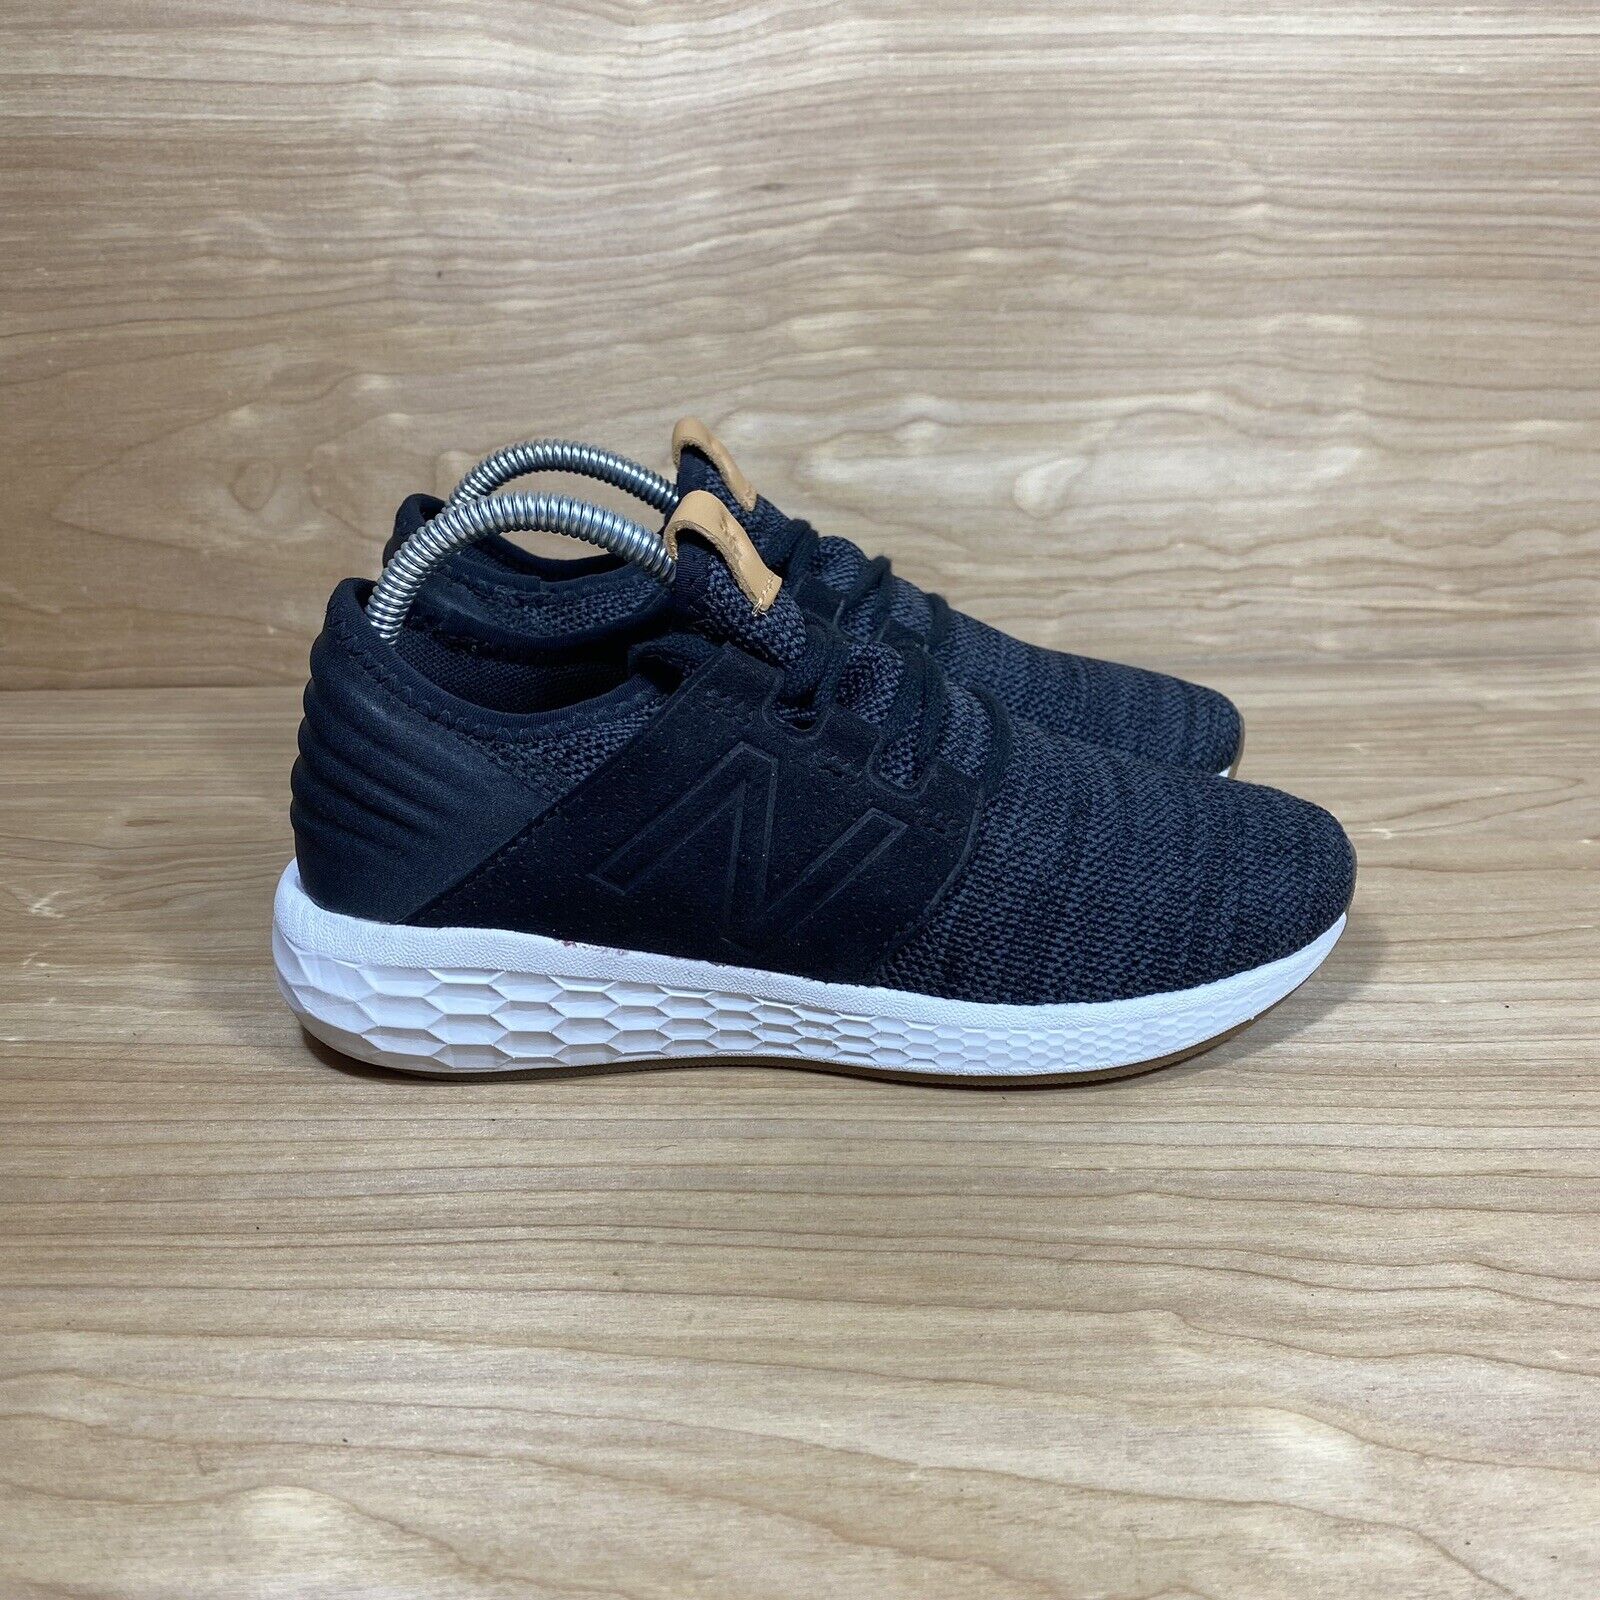 New Balance Womens Ff Cruz V2 Black Running Shoes Sneakers Wcruzkb2 Size  6.5 | Ebay